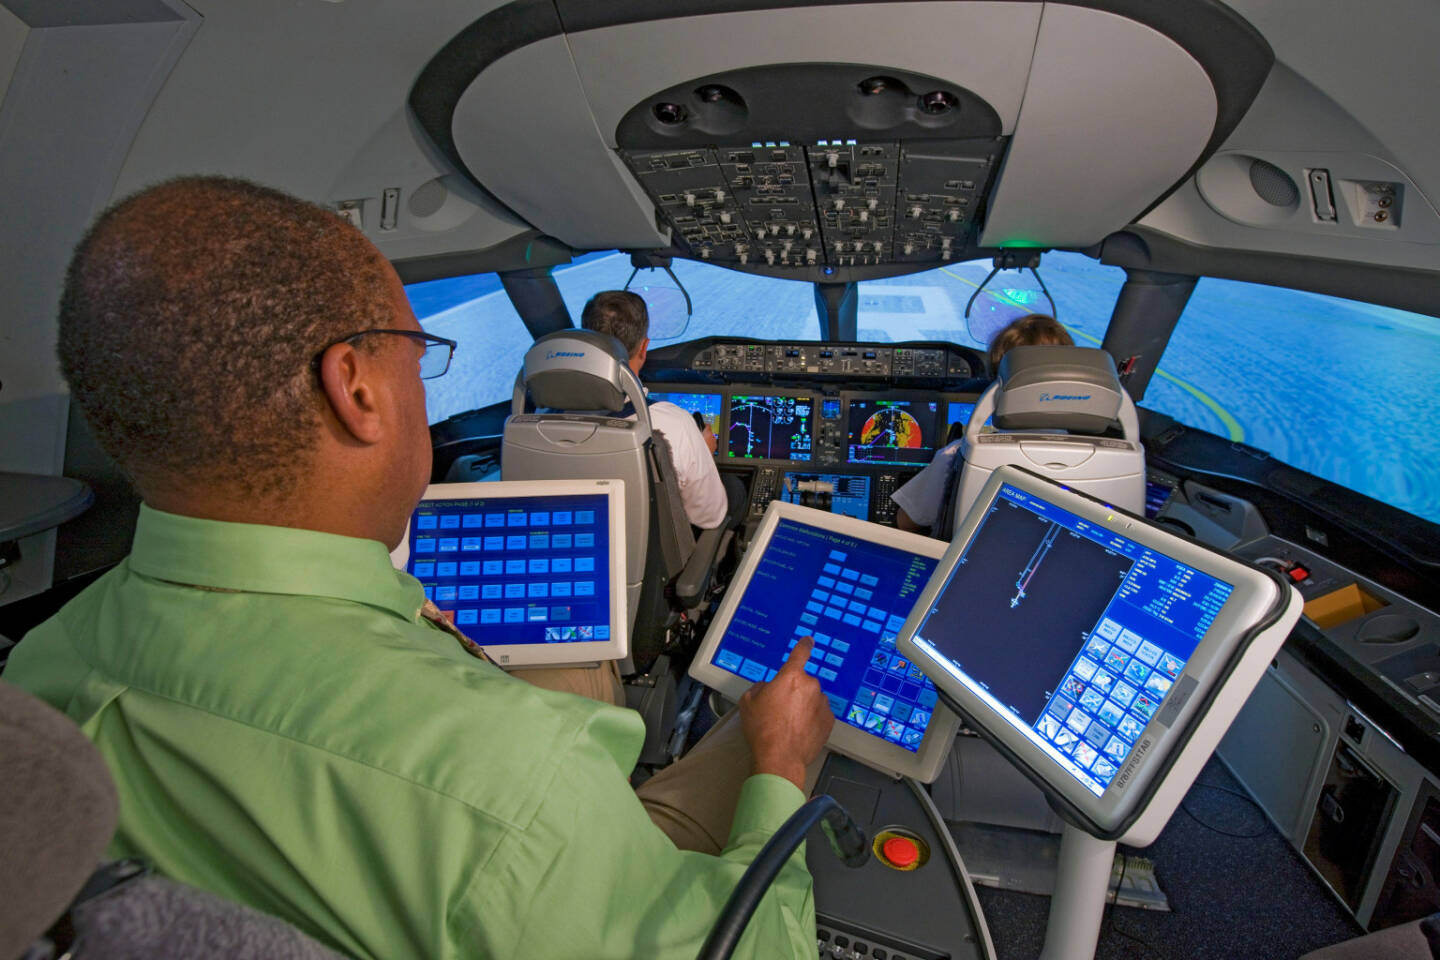 Interior 787 Motion Based Simulator, Boeing Company

